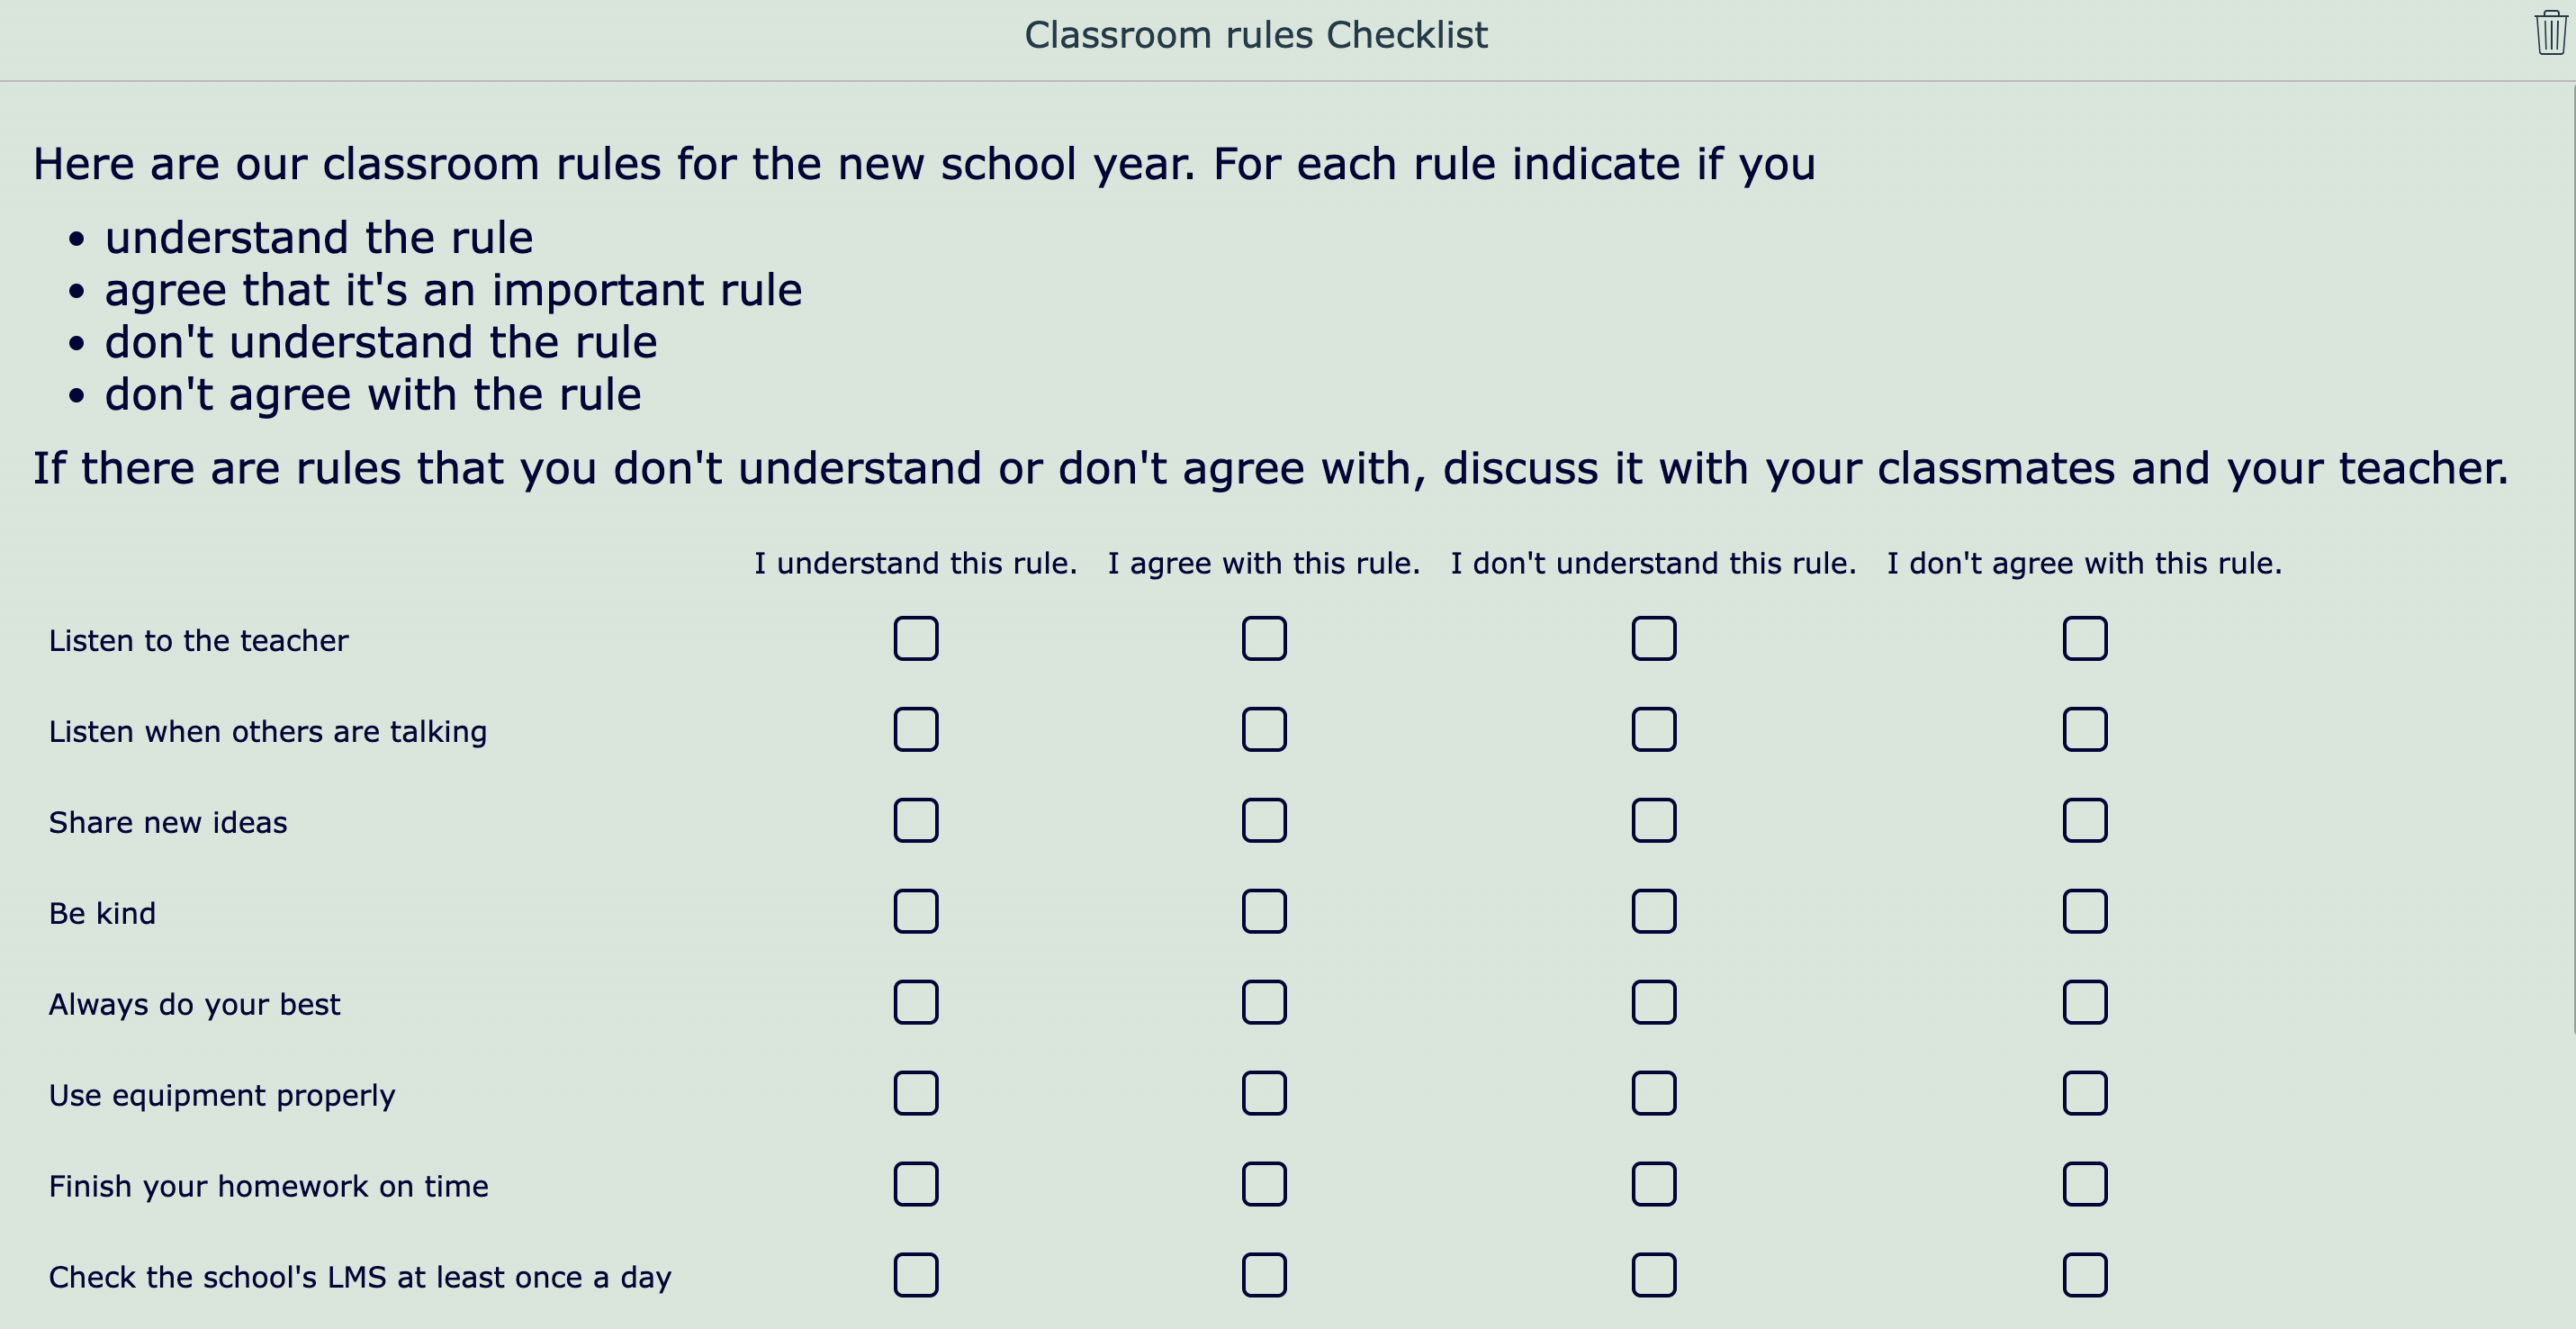 Classroom rules checklist